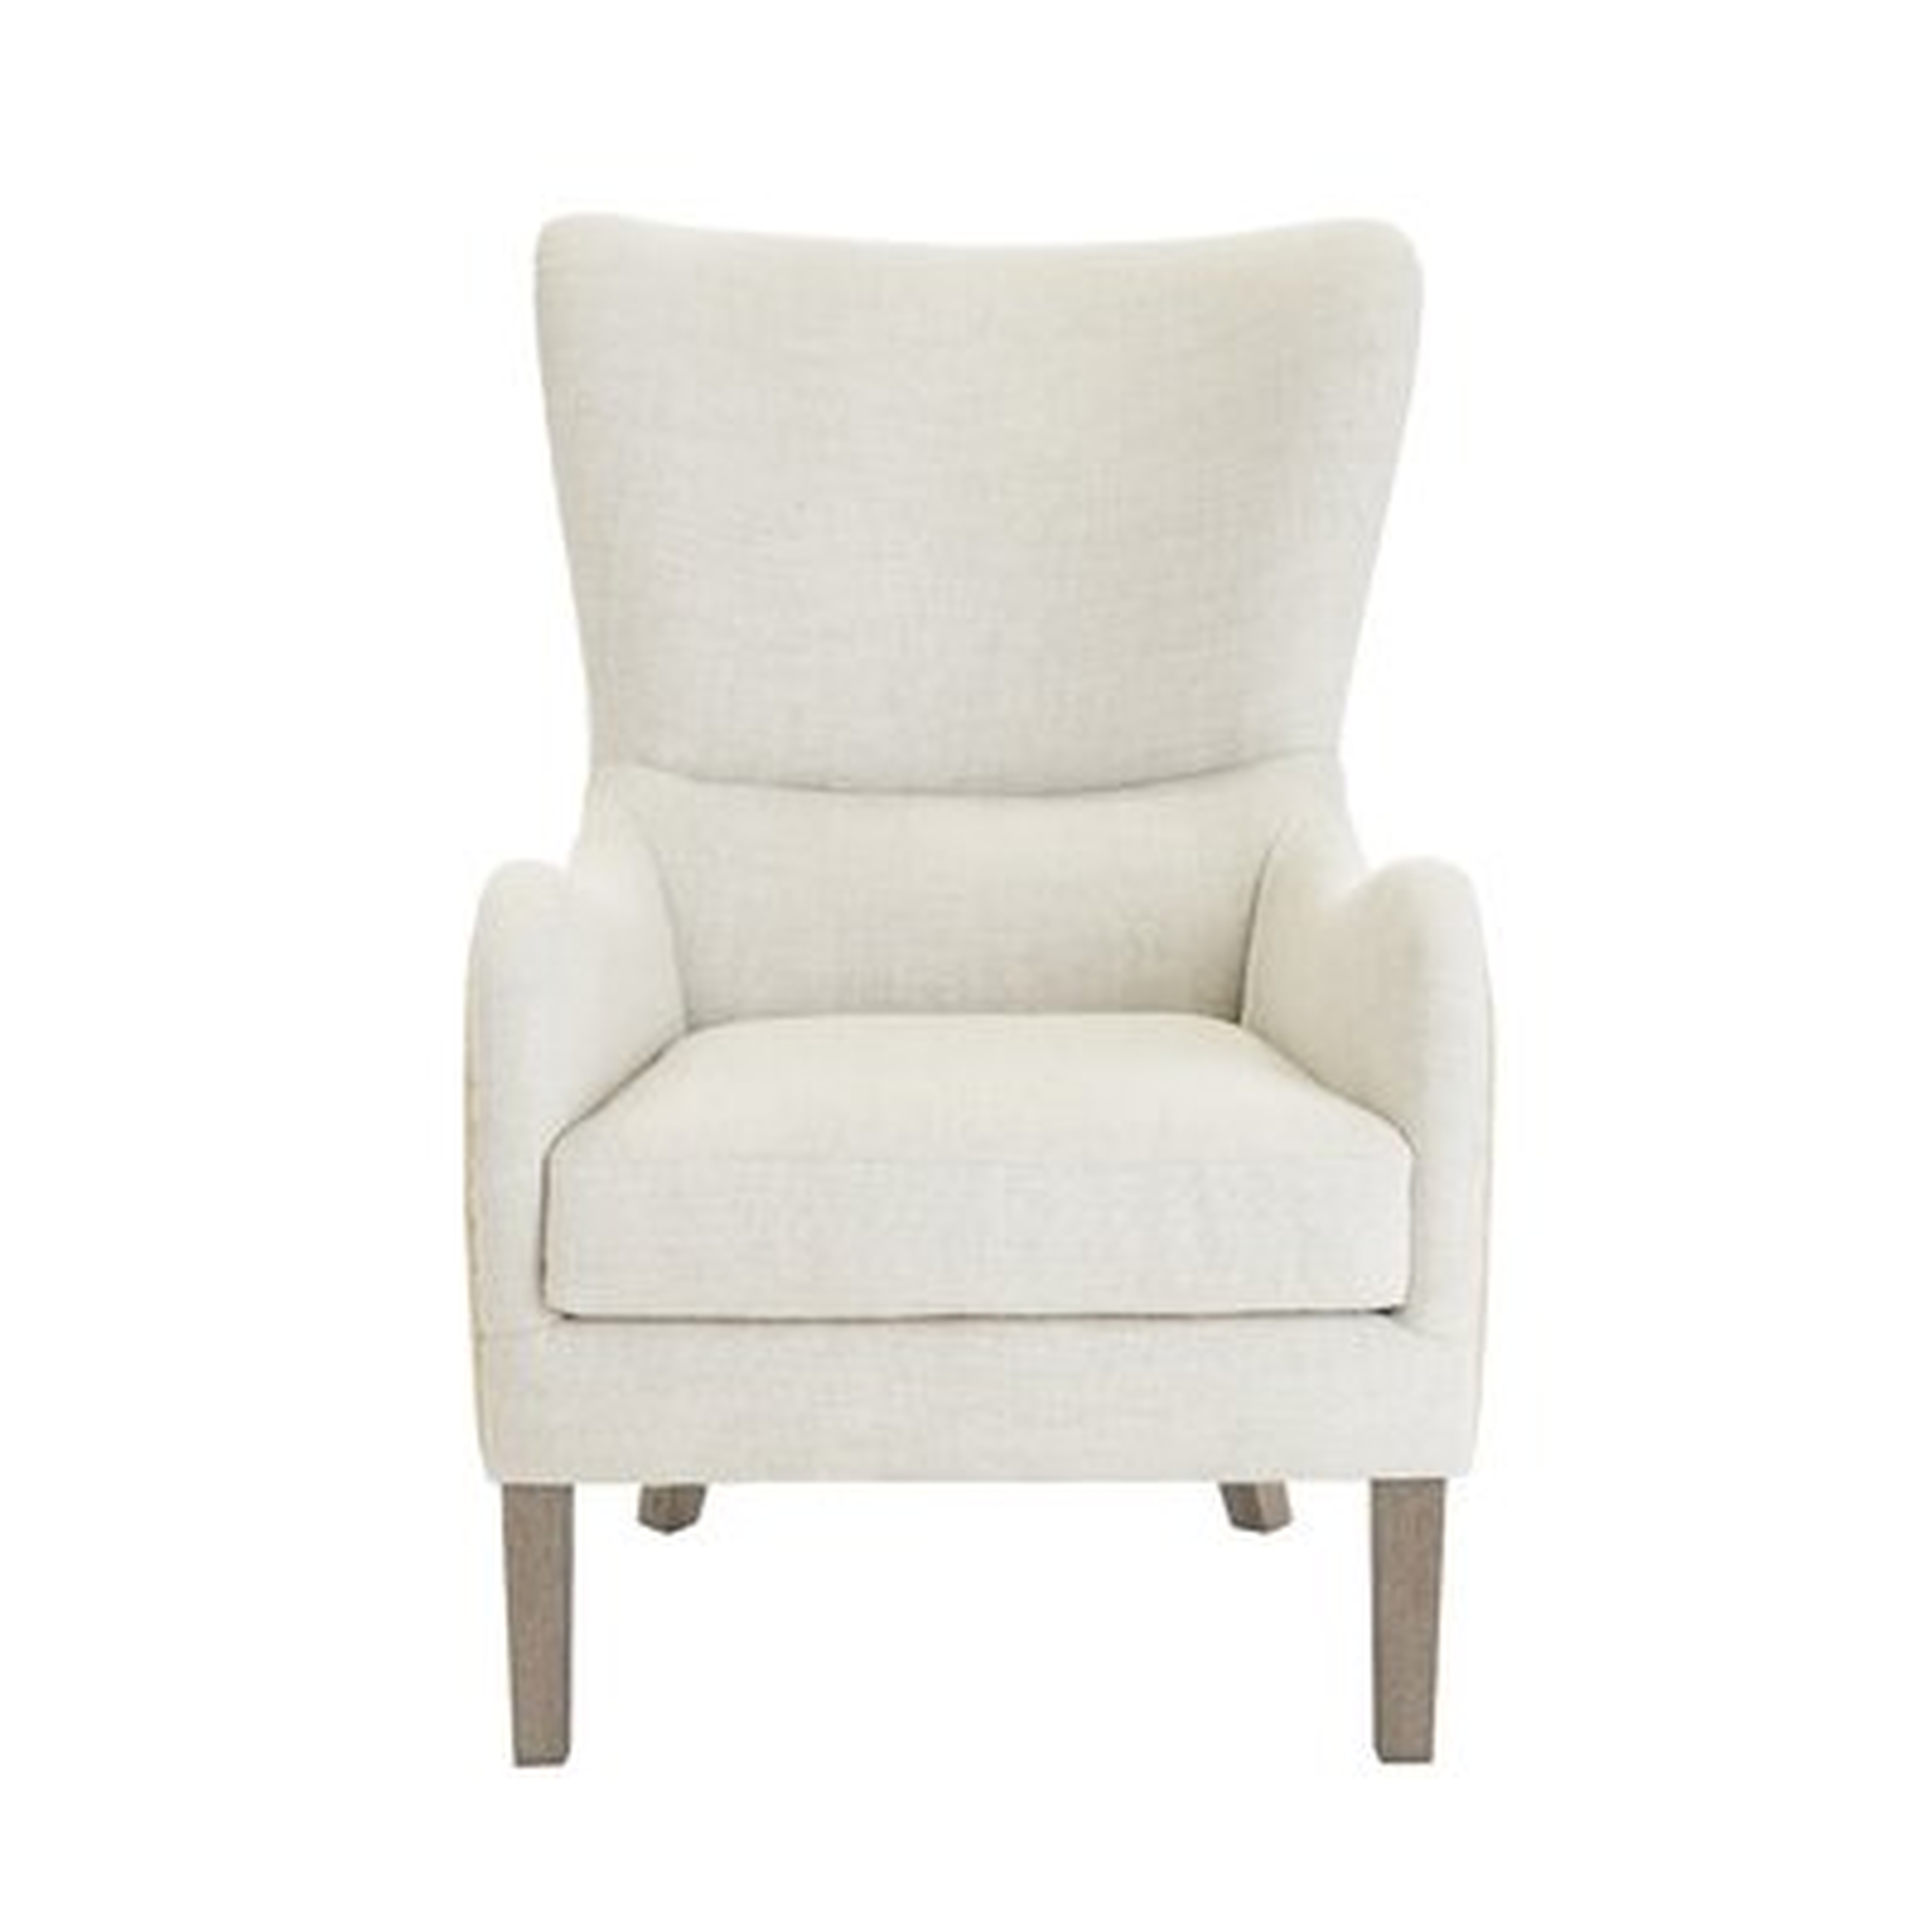 Elle Decor Wingback Chair  - in stock 8/3 - Wayfair